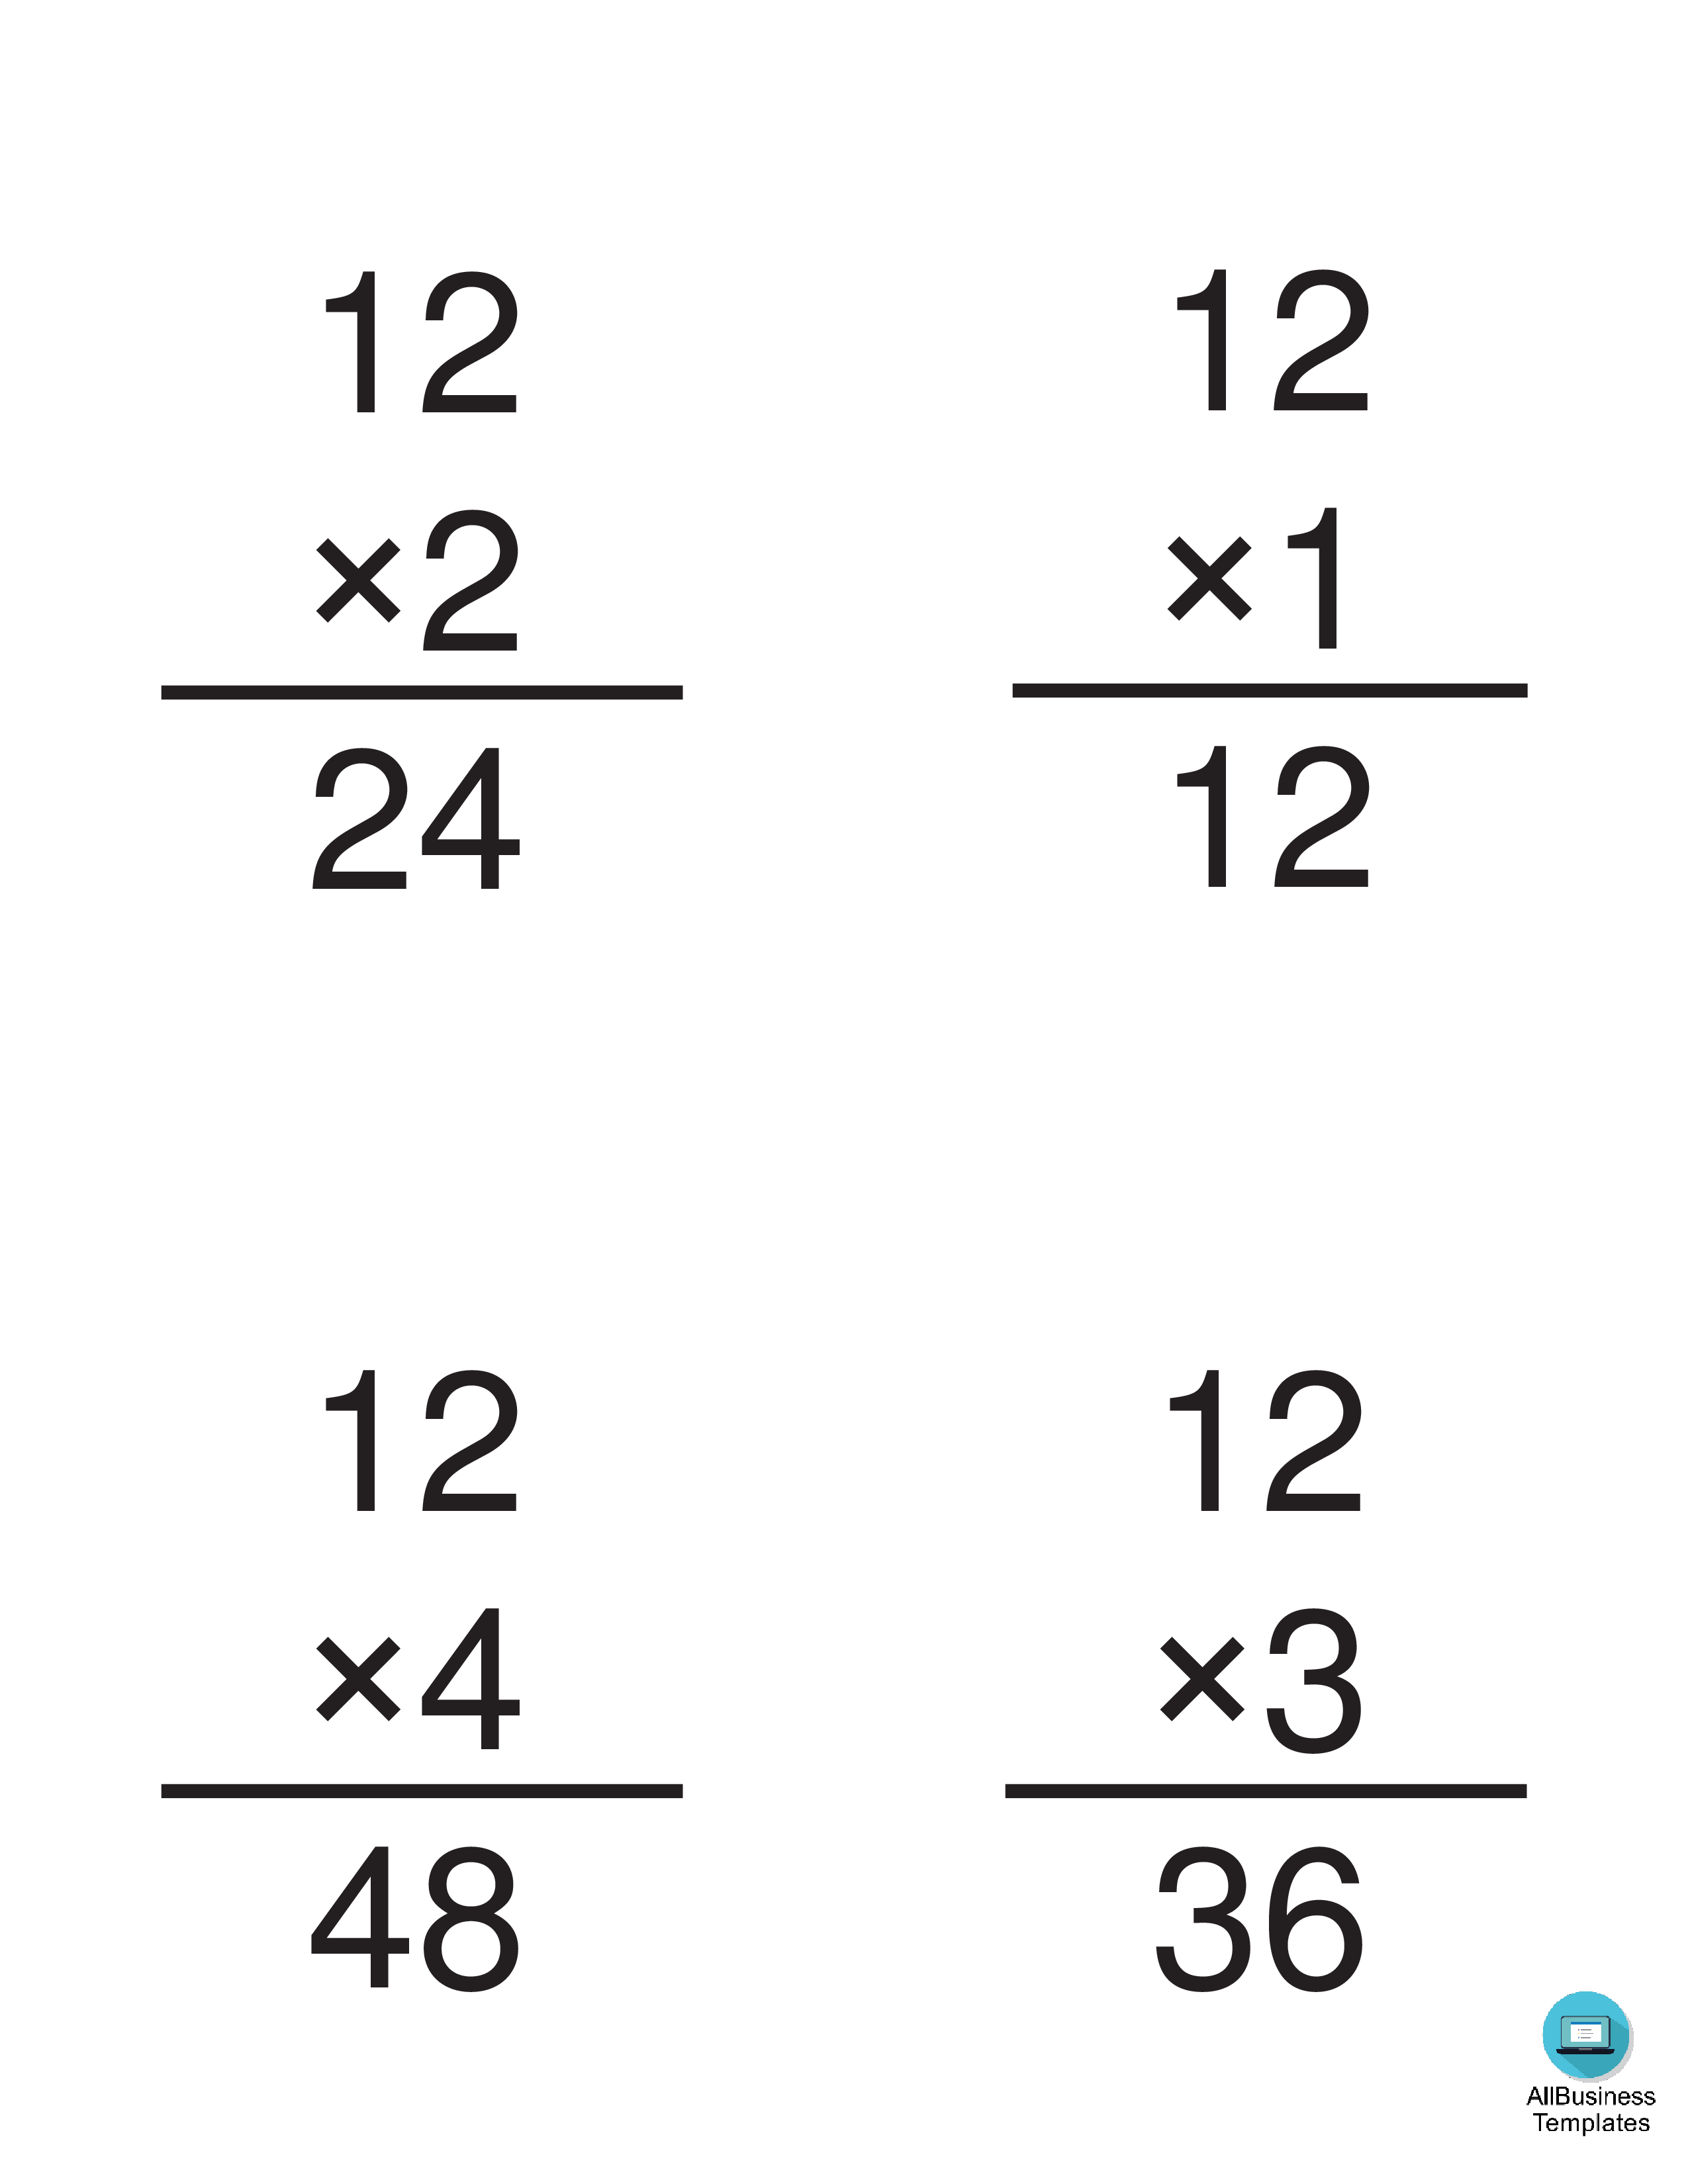 Multiplication times 12 flashcards main image